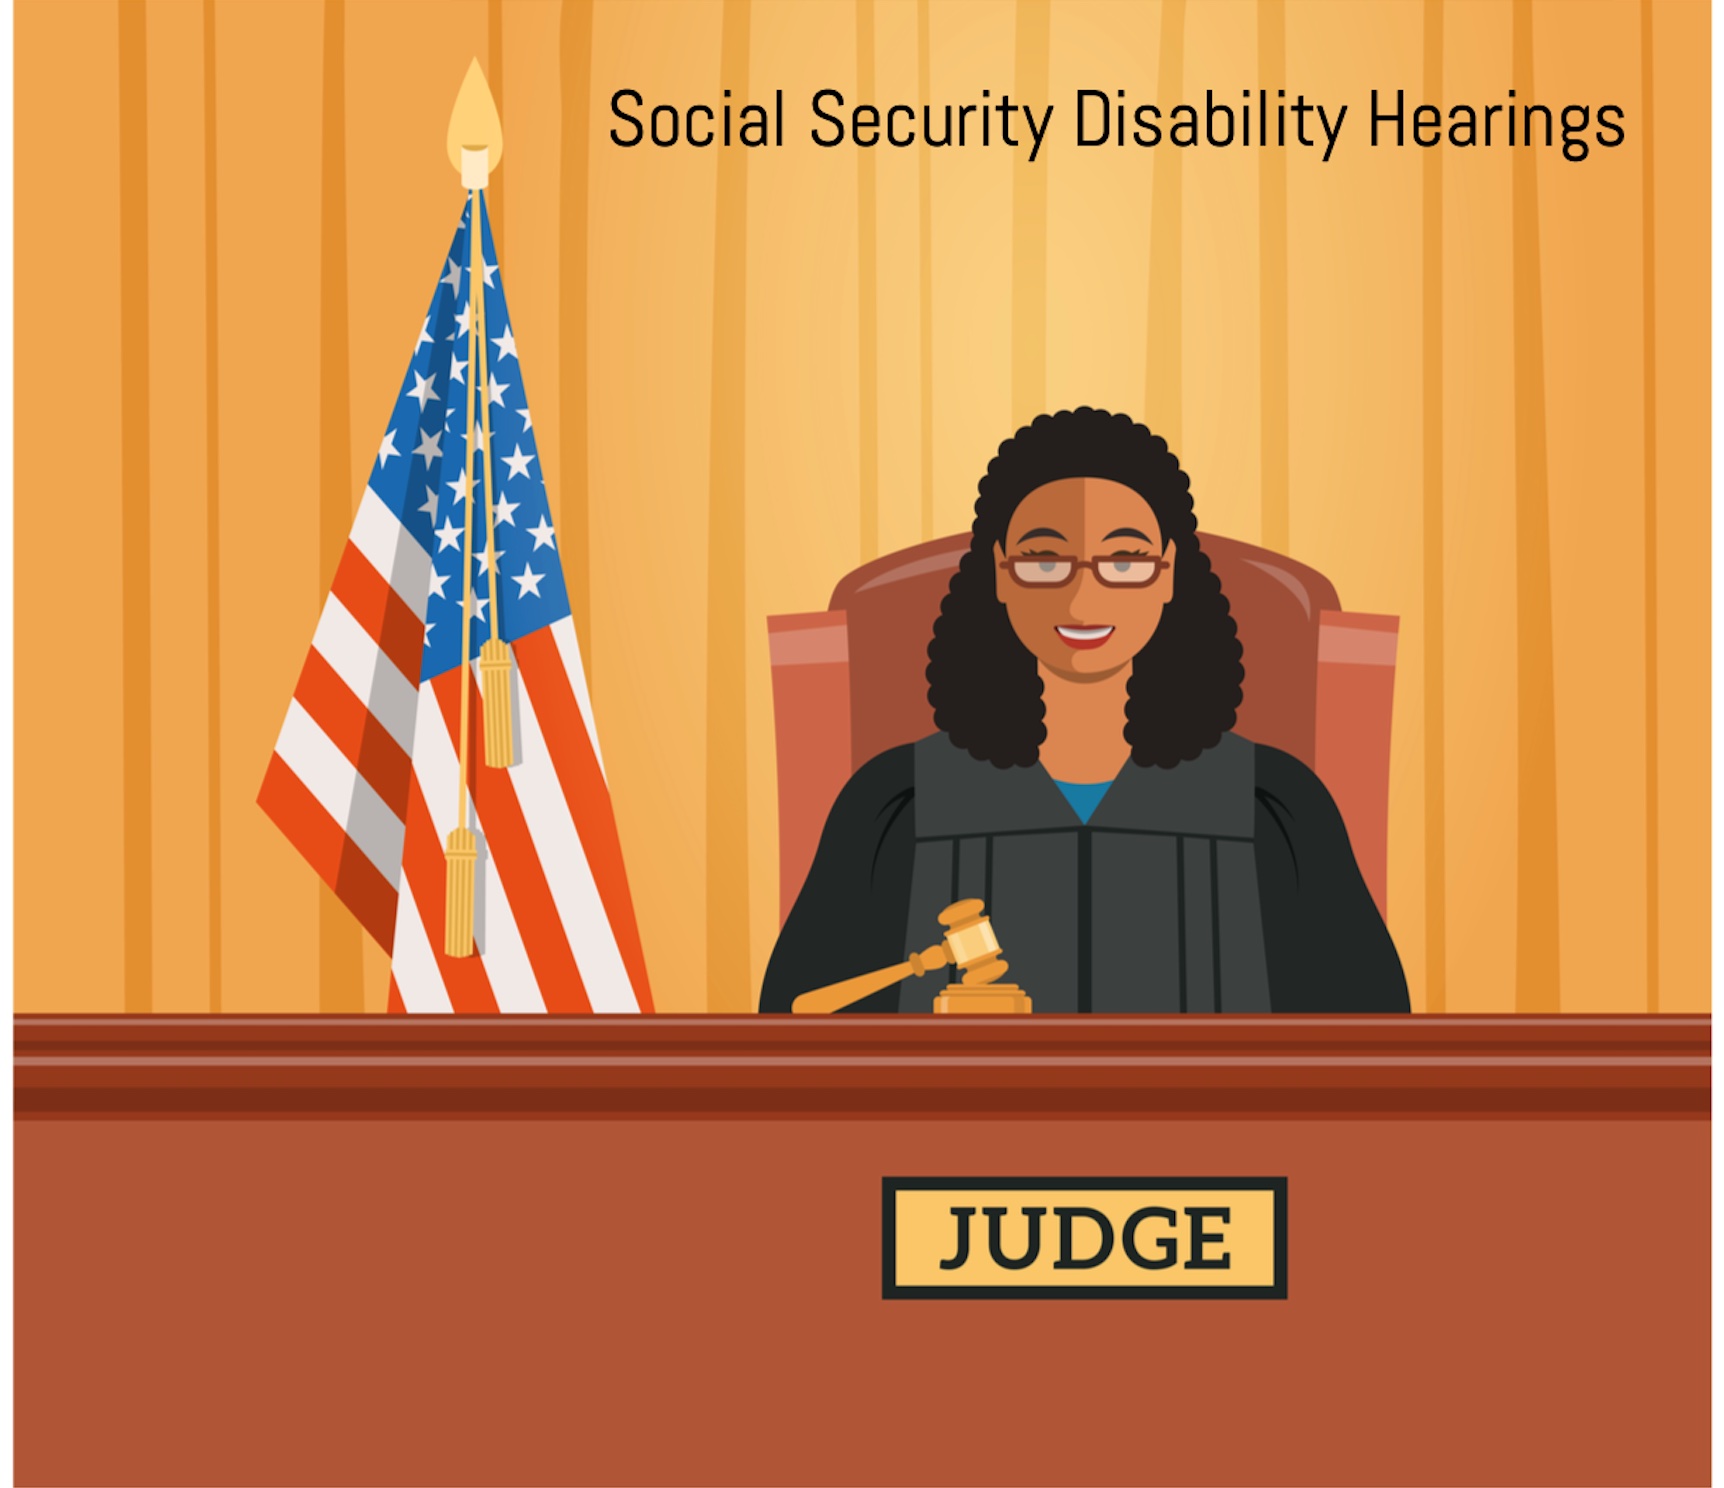 Social Security Disability judge